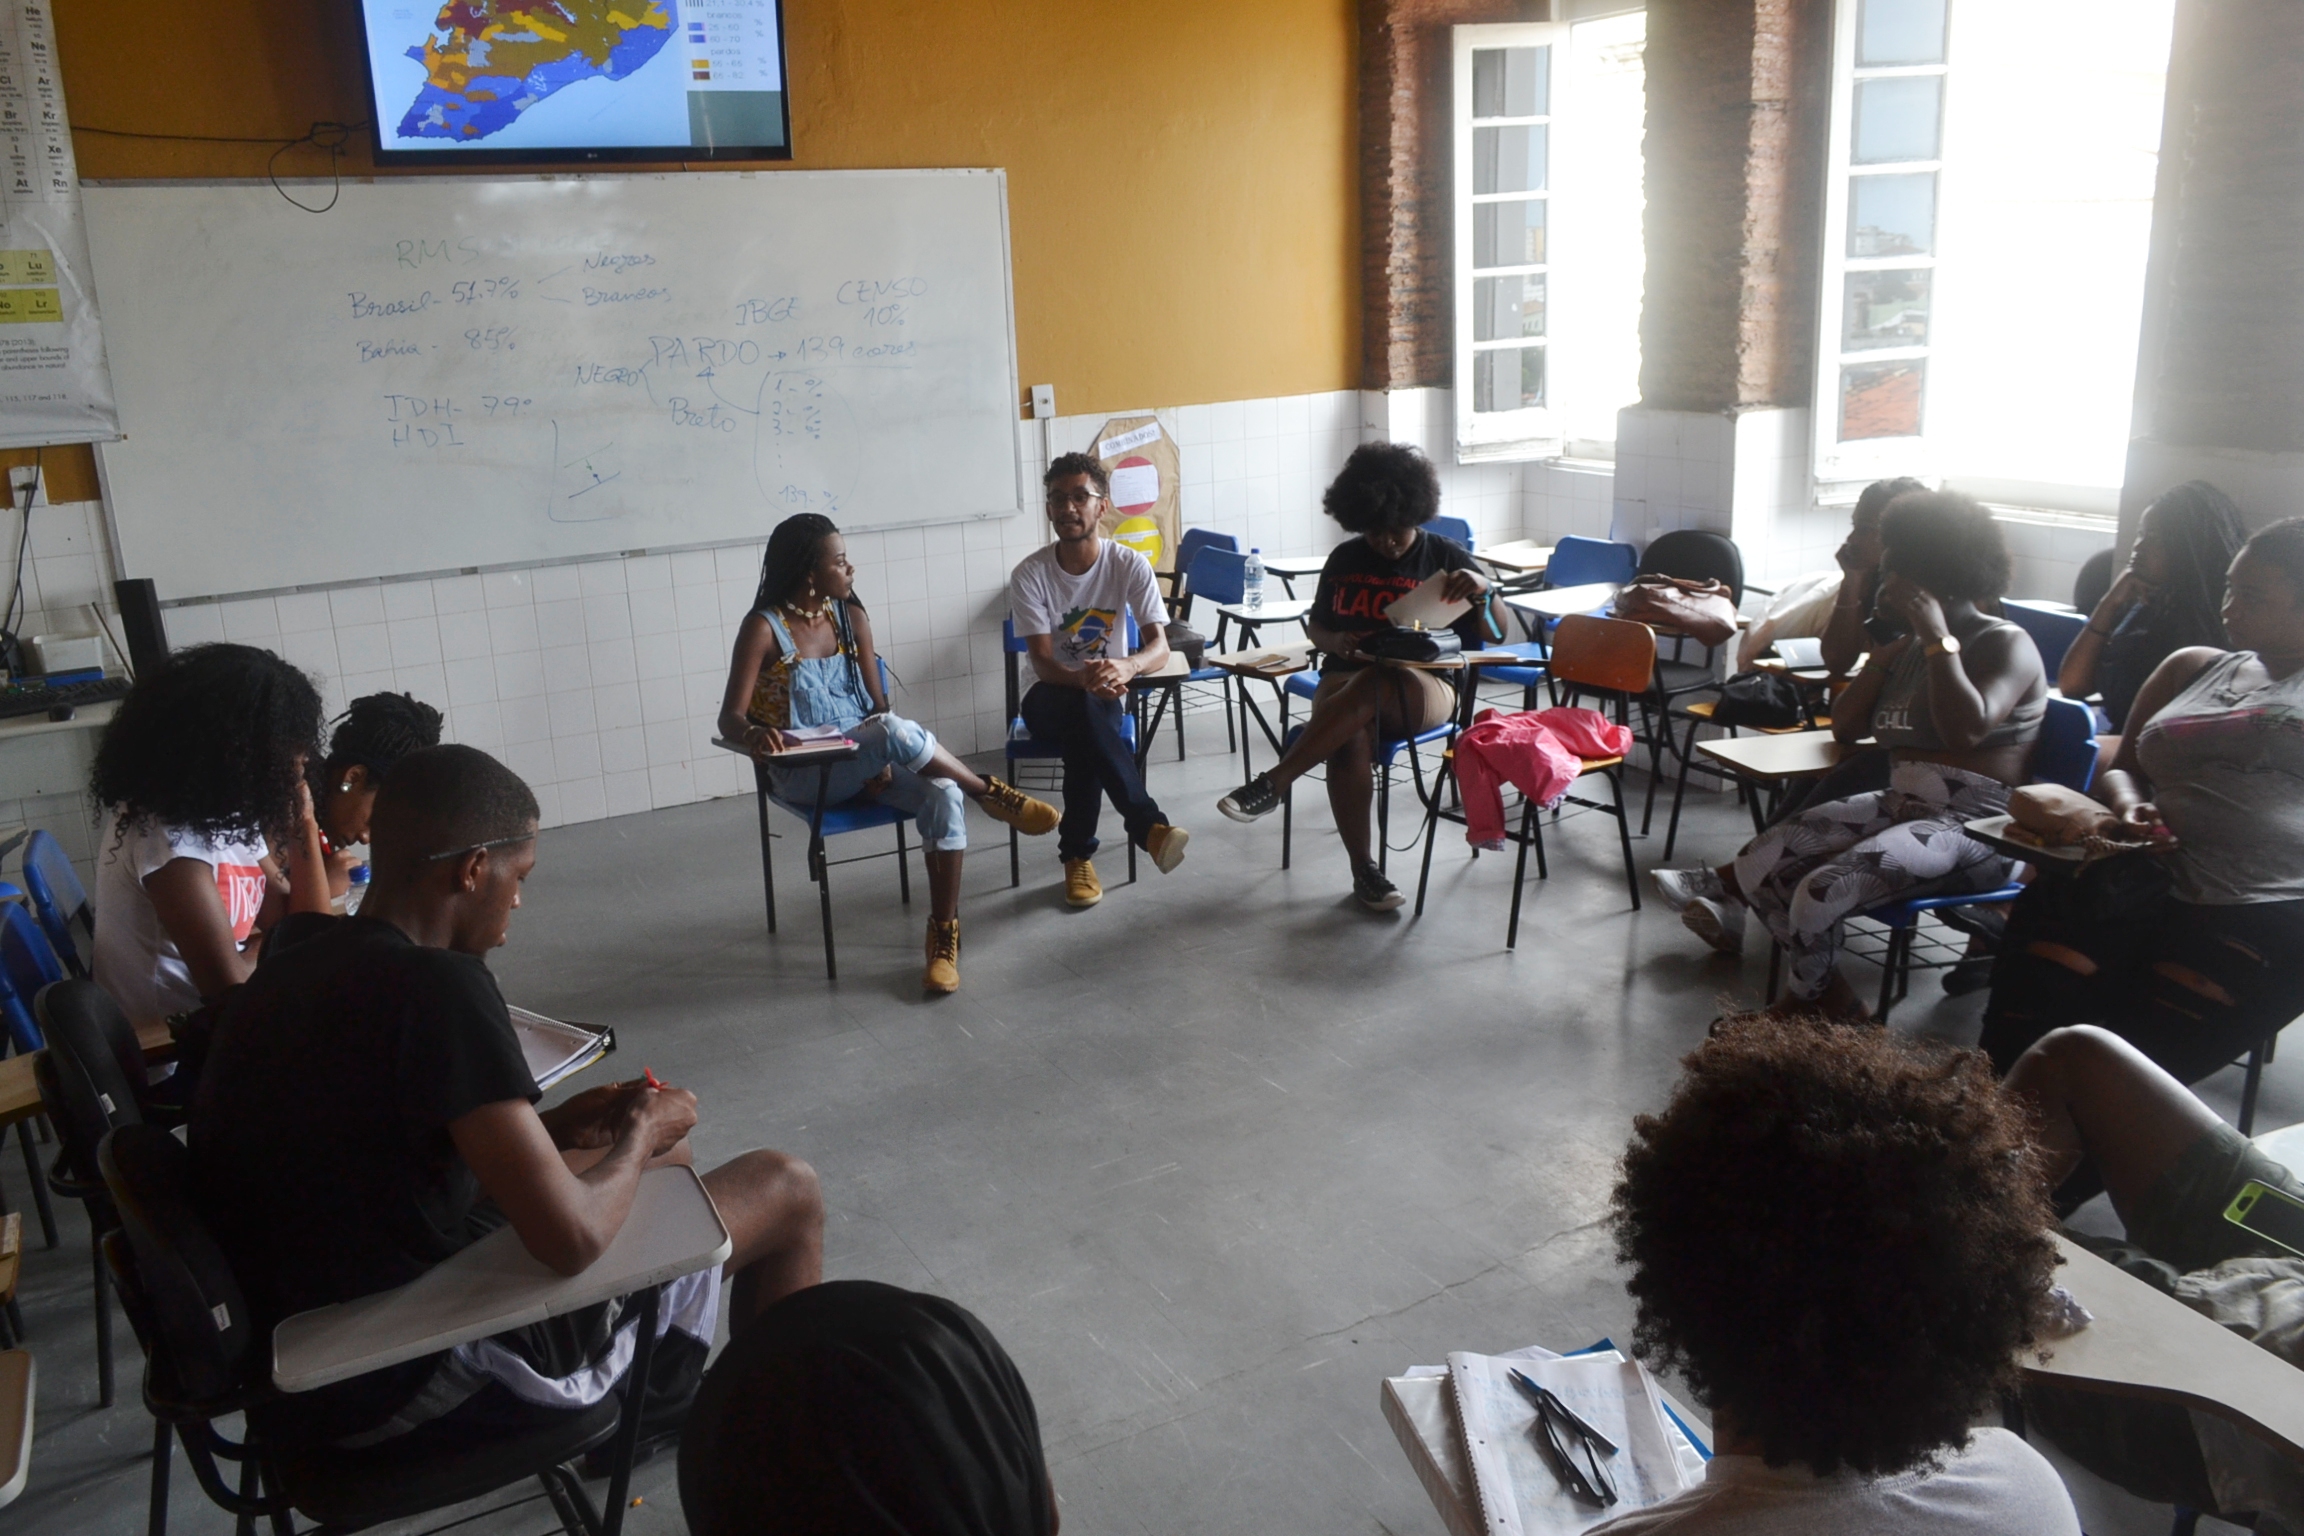 Intercambio - Biko recebe estudantes da Universidade negra norteamericana Winston Salem